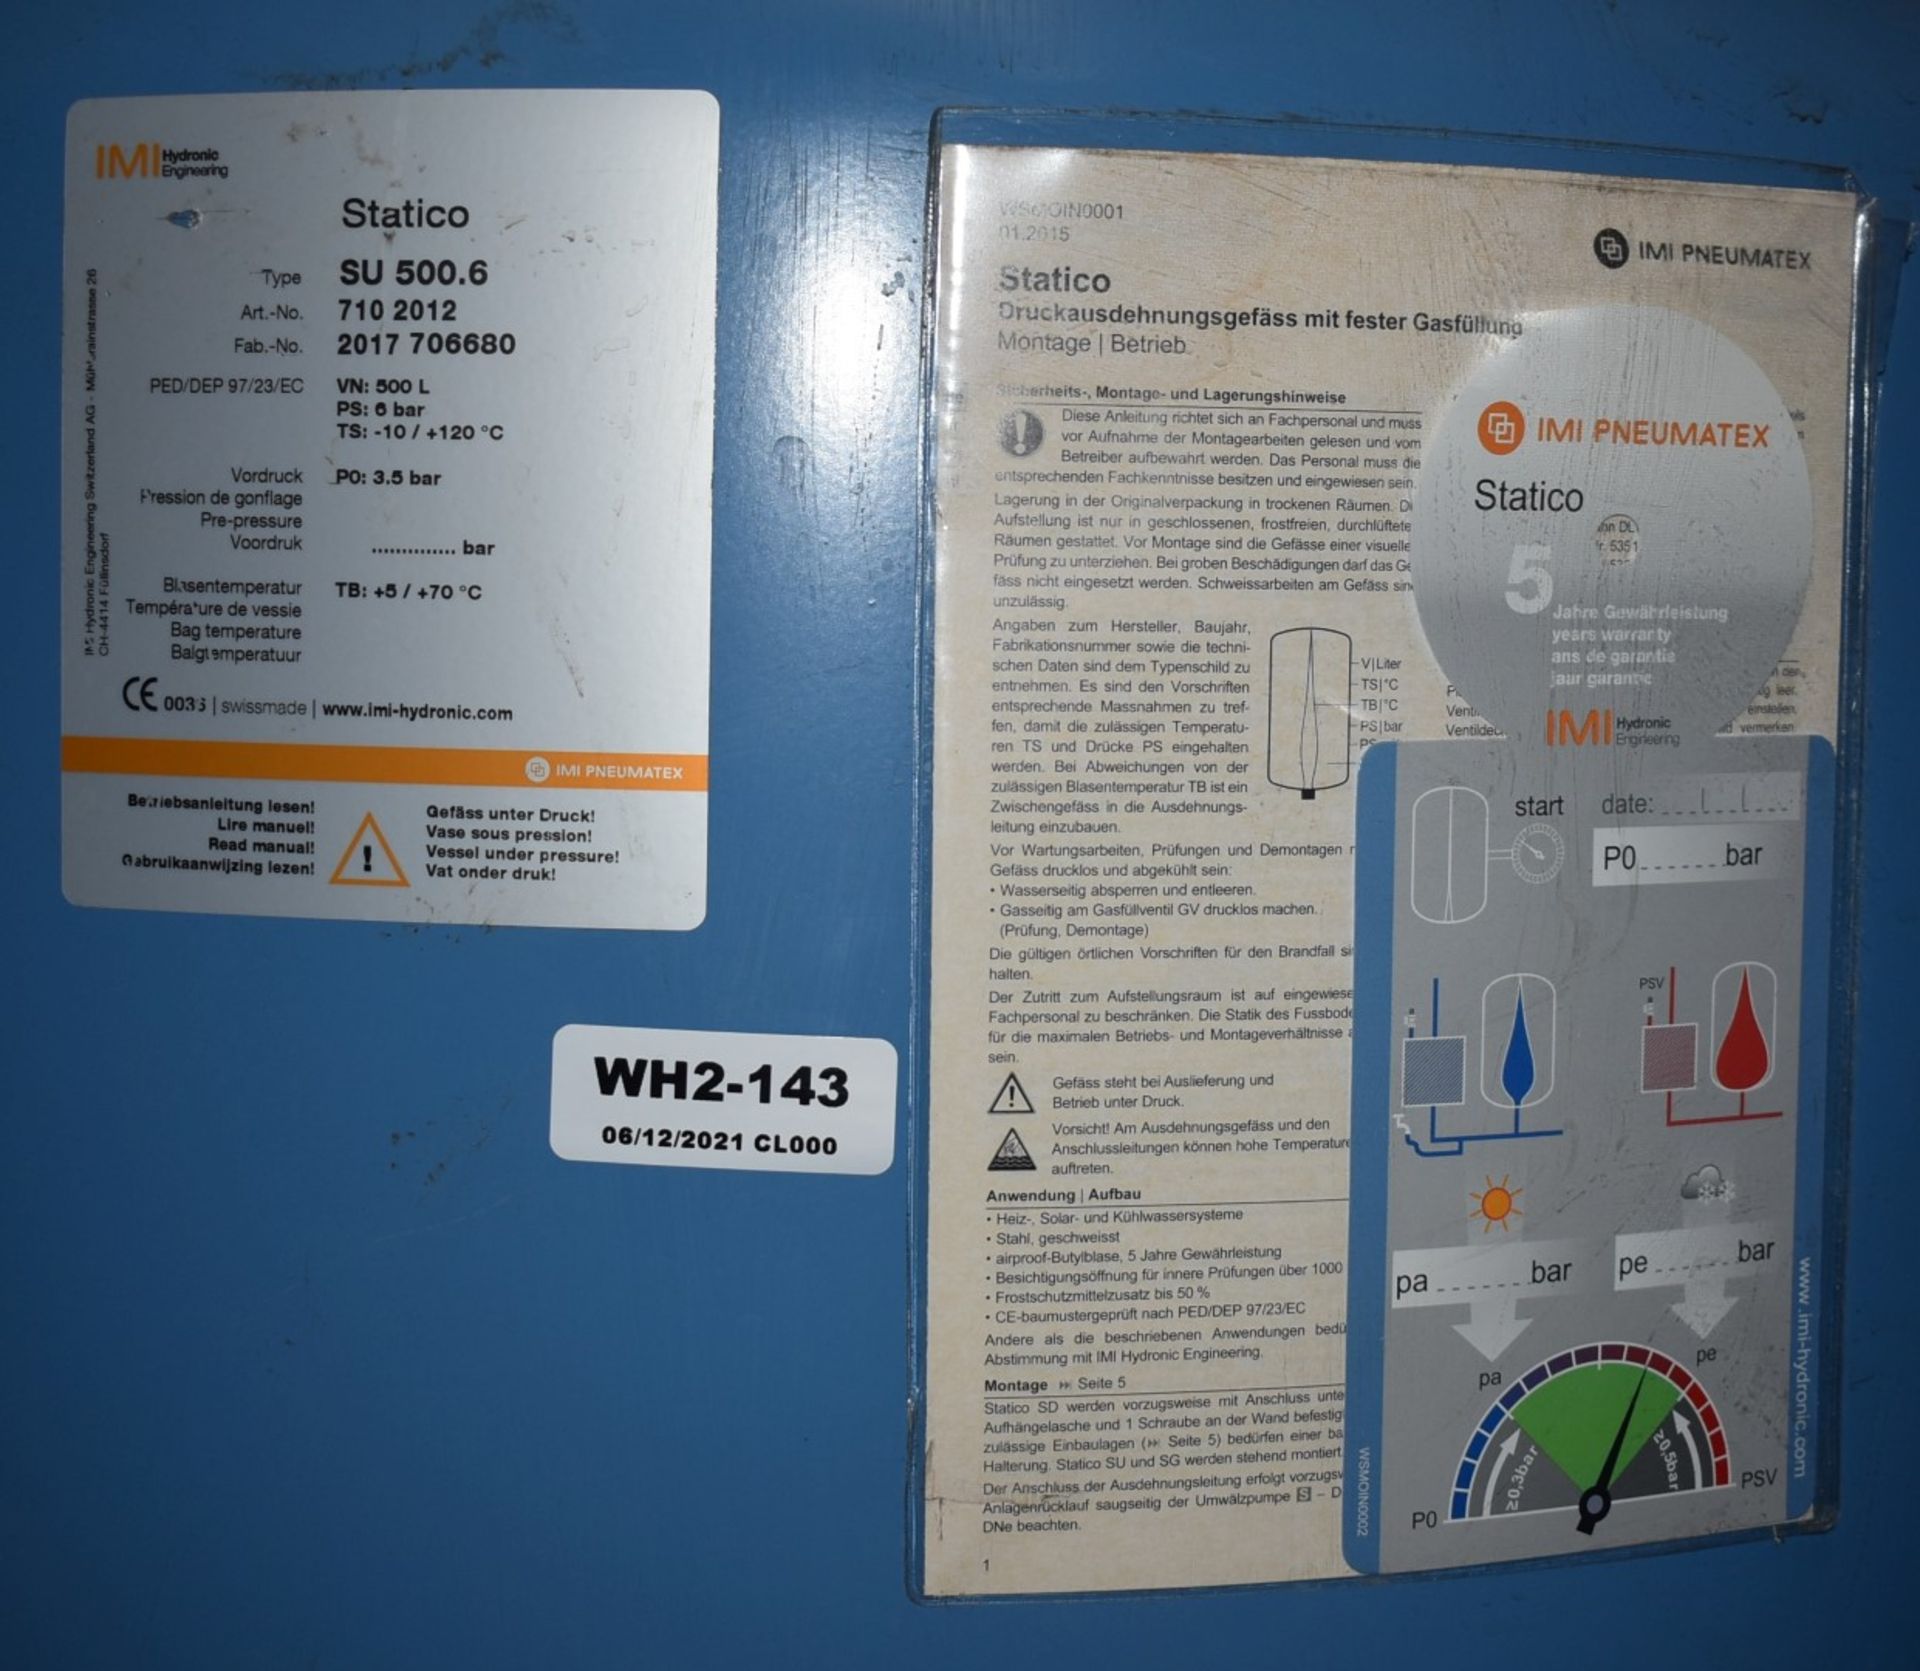 1 x Pneumatex Statico 500L 6 Bar Pressure Expansion Vessel - Product Code: SU 500.6 - RRP £1,678 - Image 5 of 7